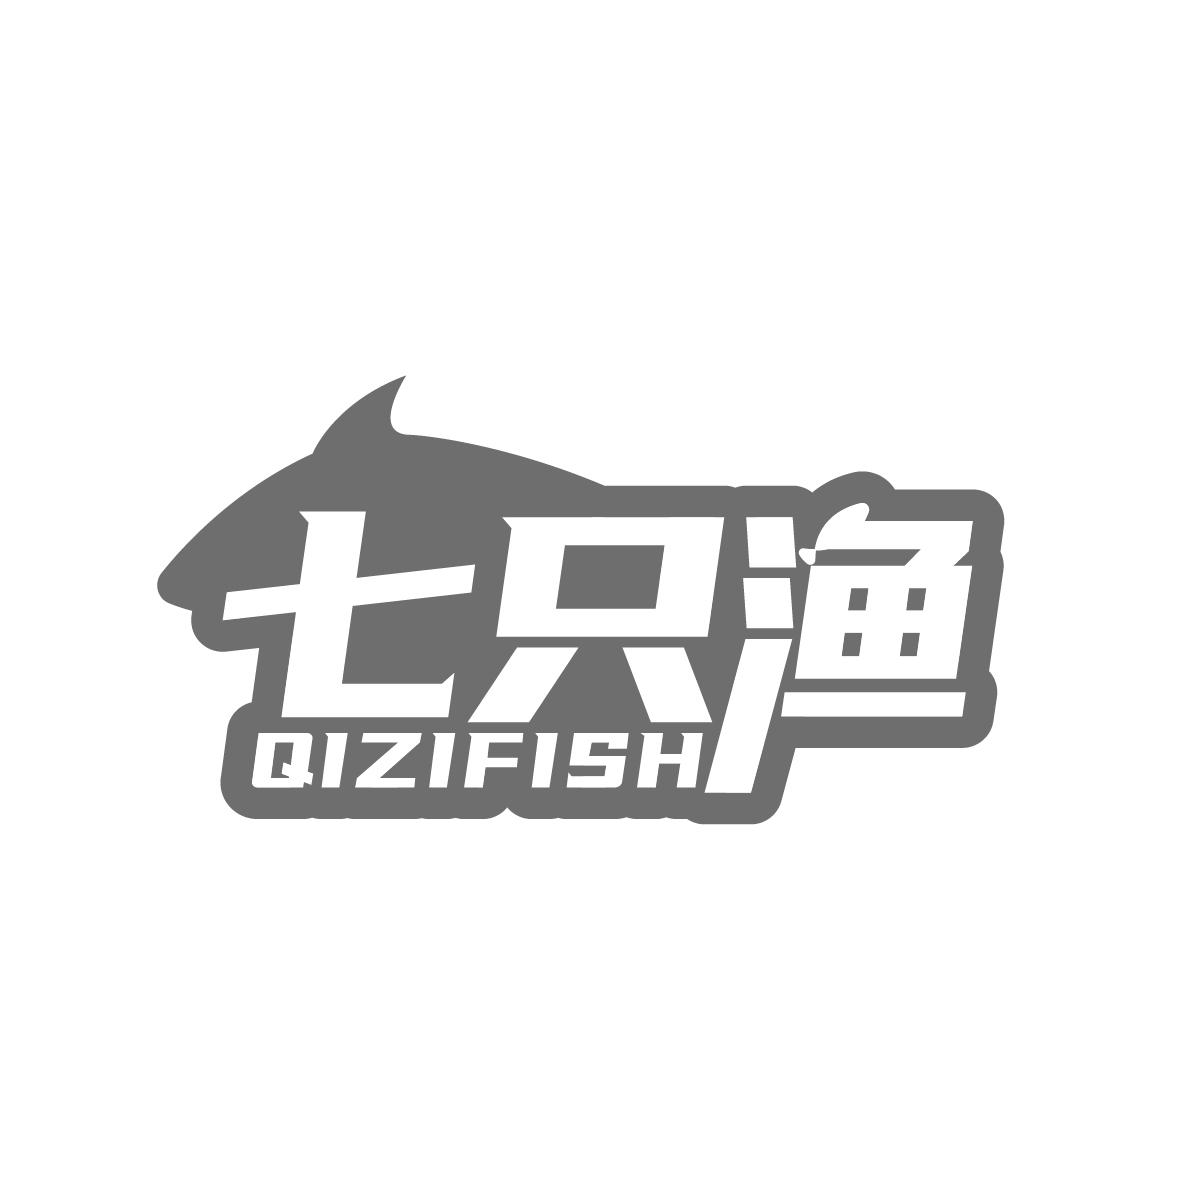 七只渔 QIZIFISH商标转让